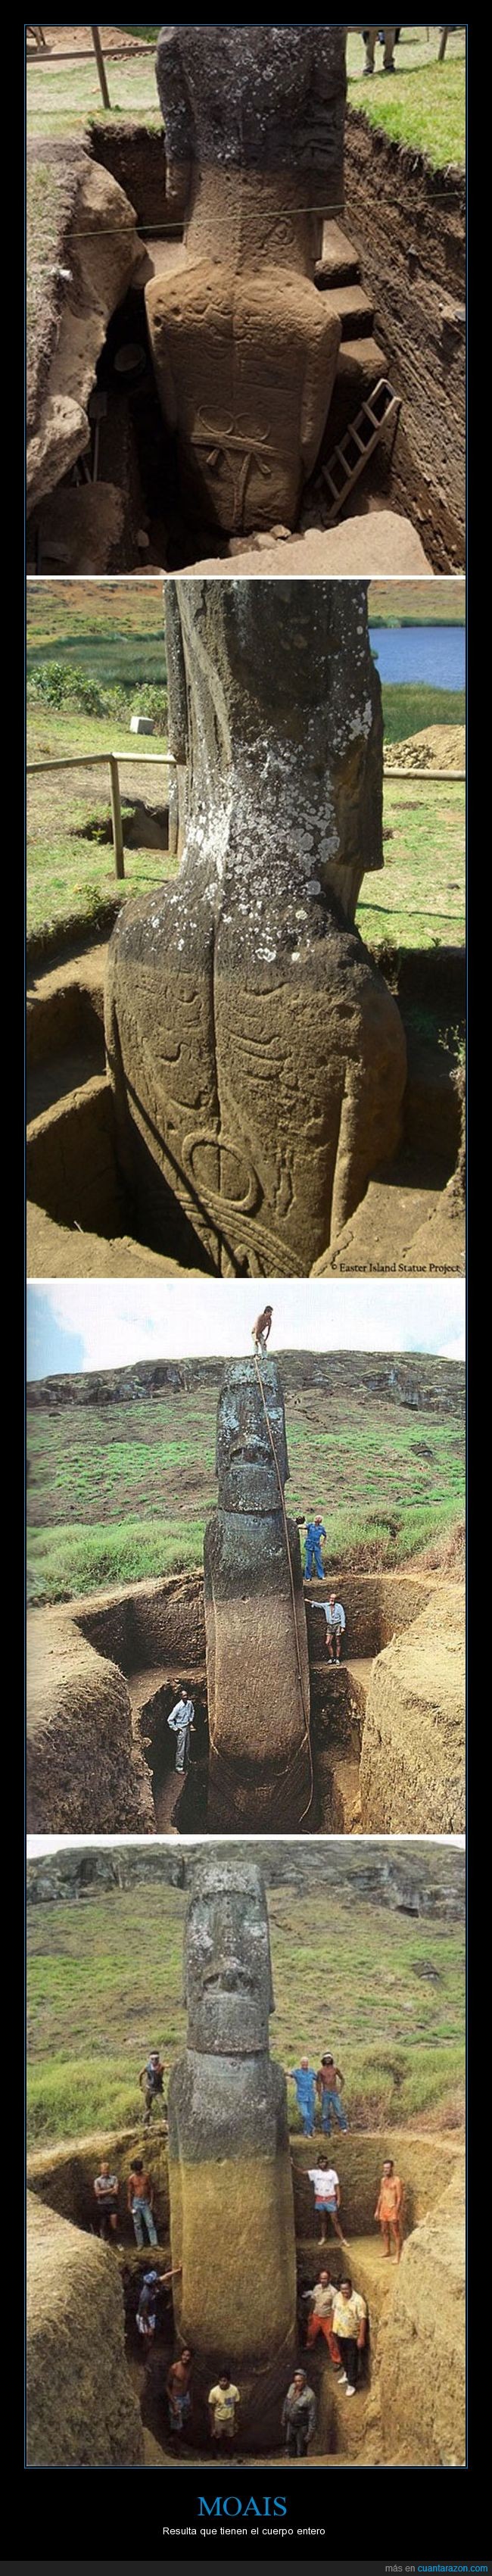 isla de la pascua,Moai,grande,oculto,descubrimiento